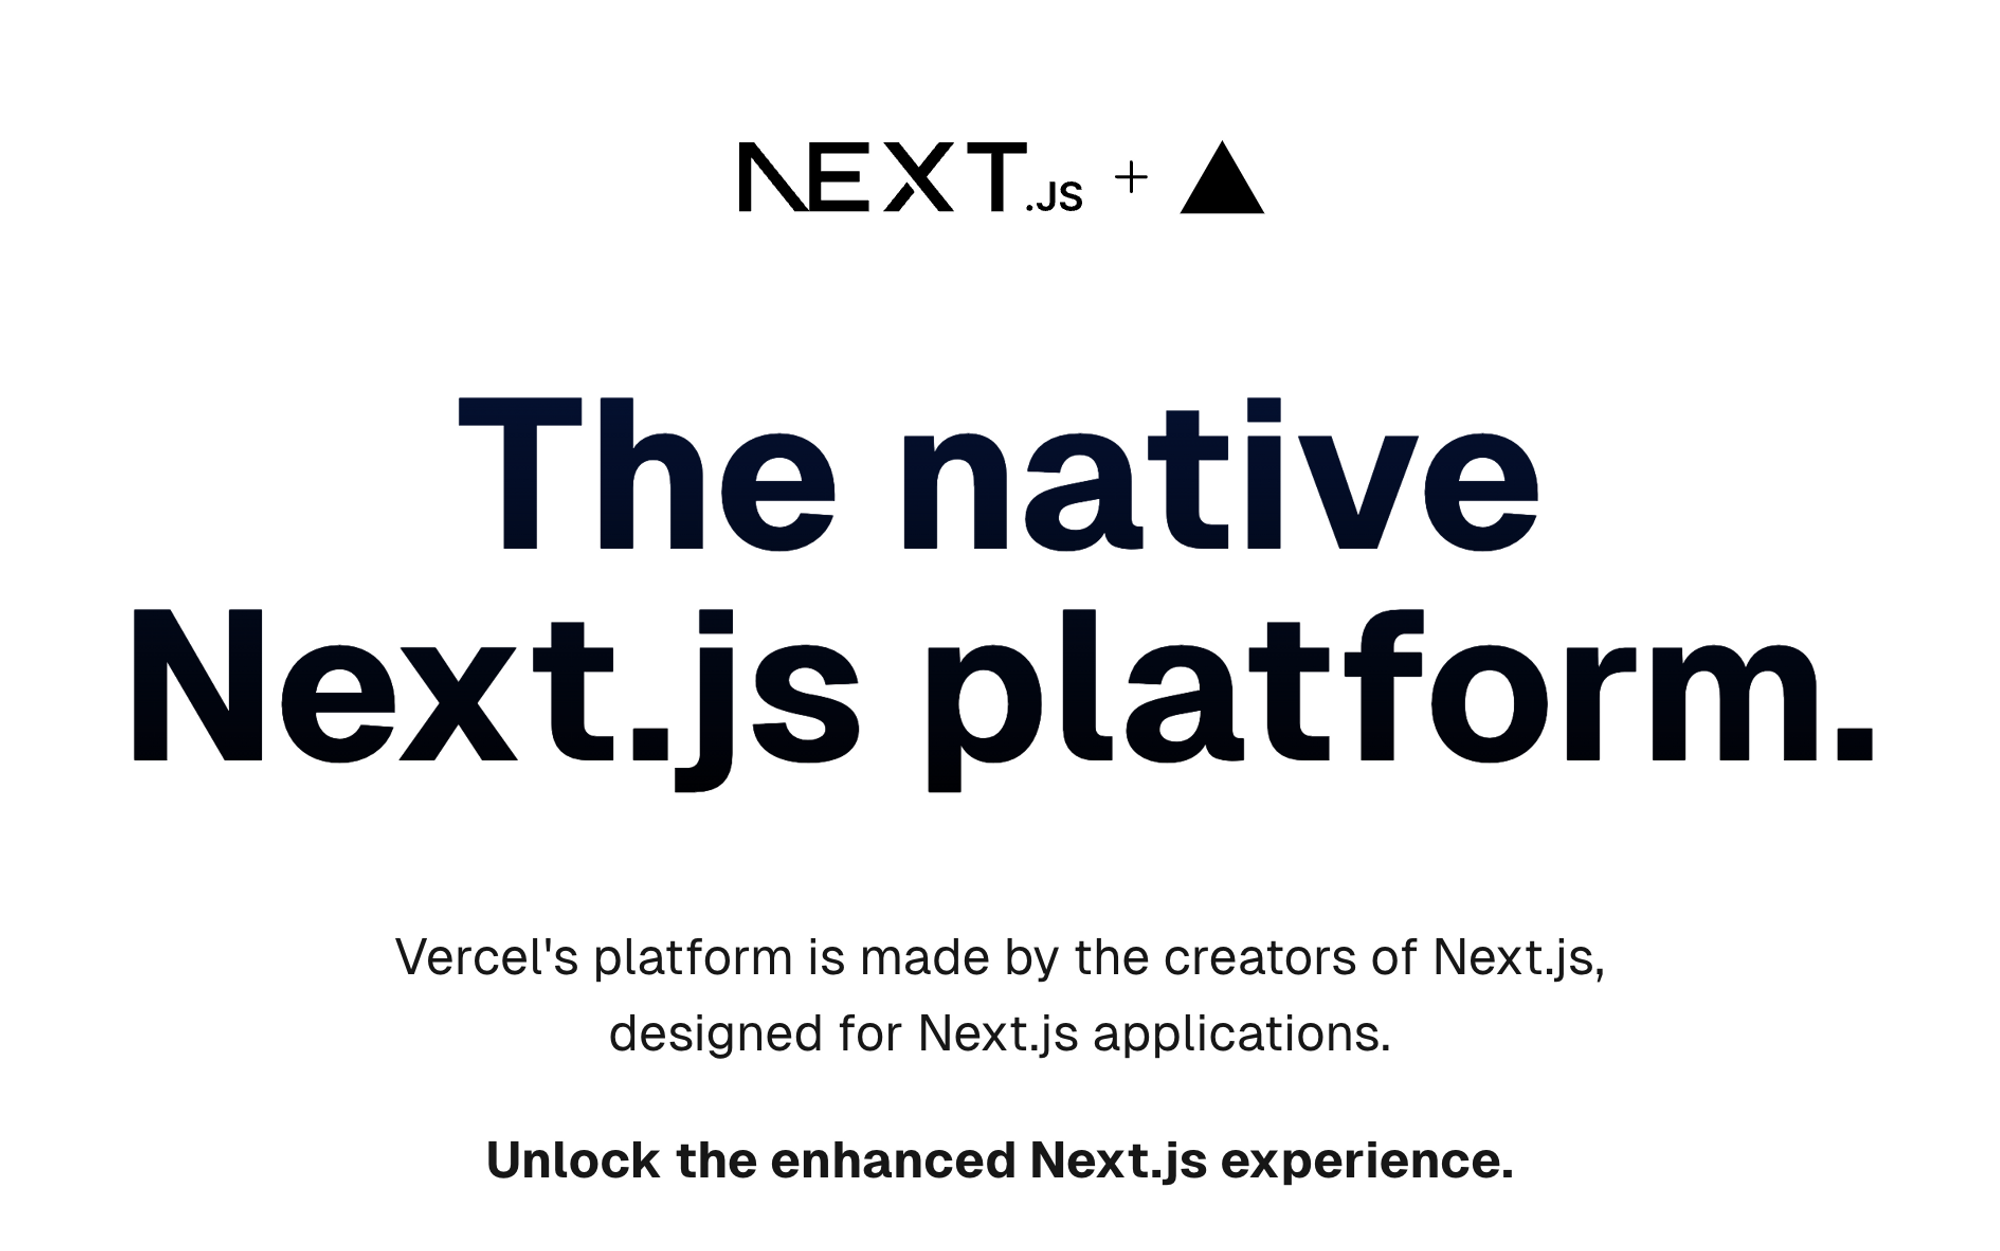 The native Next.js platform